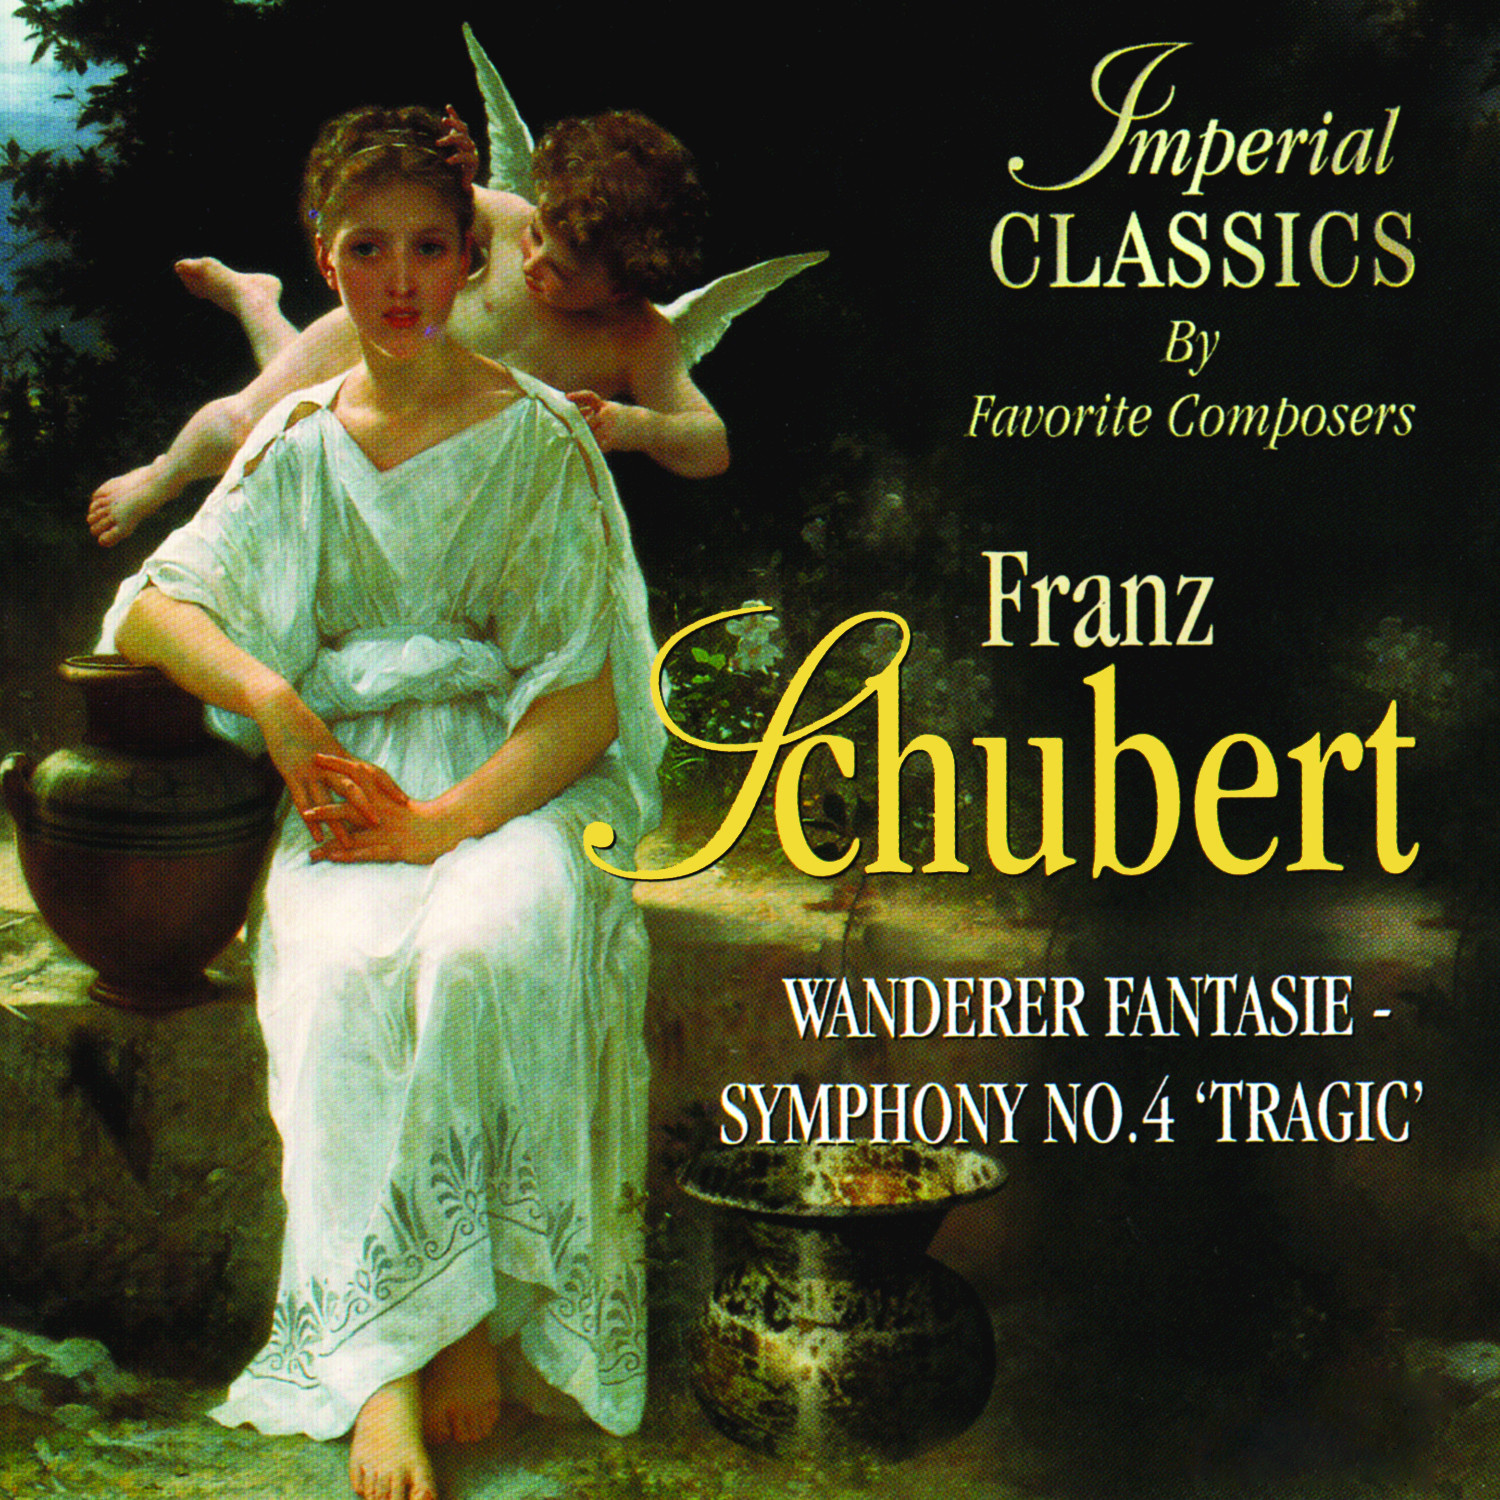 Schubert: Wanderer Fantasie - Symphony No.4 'Tragic'